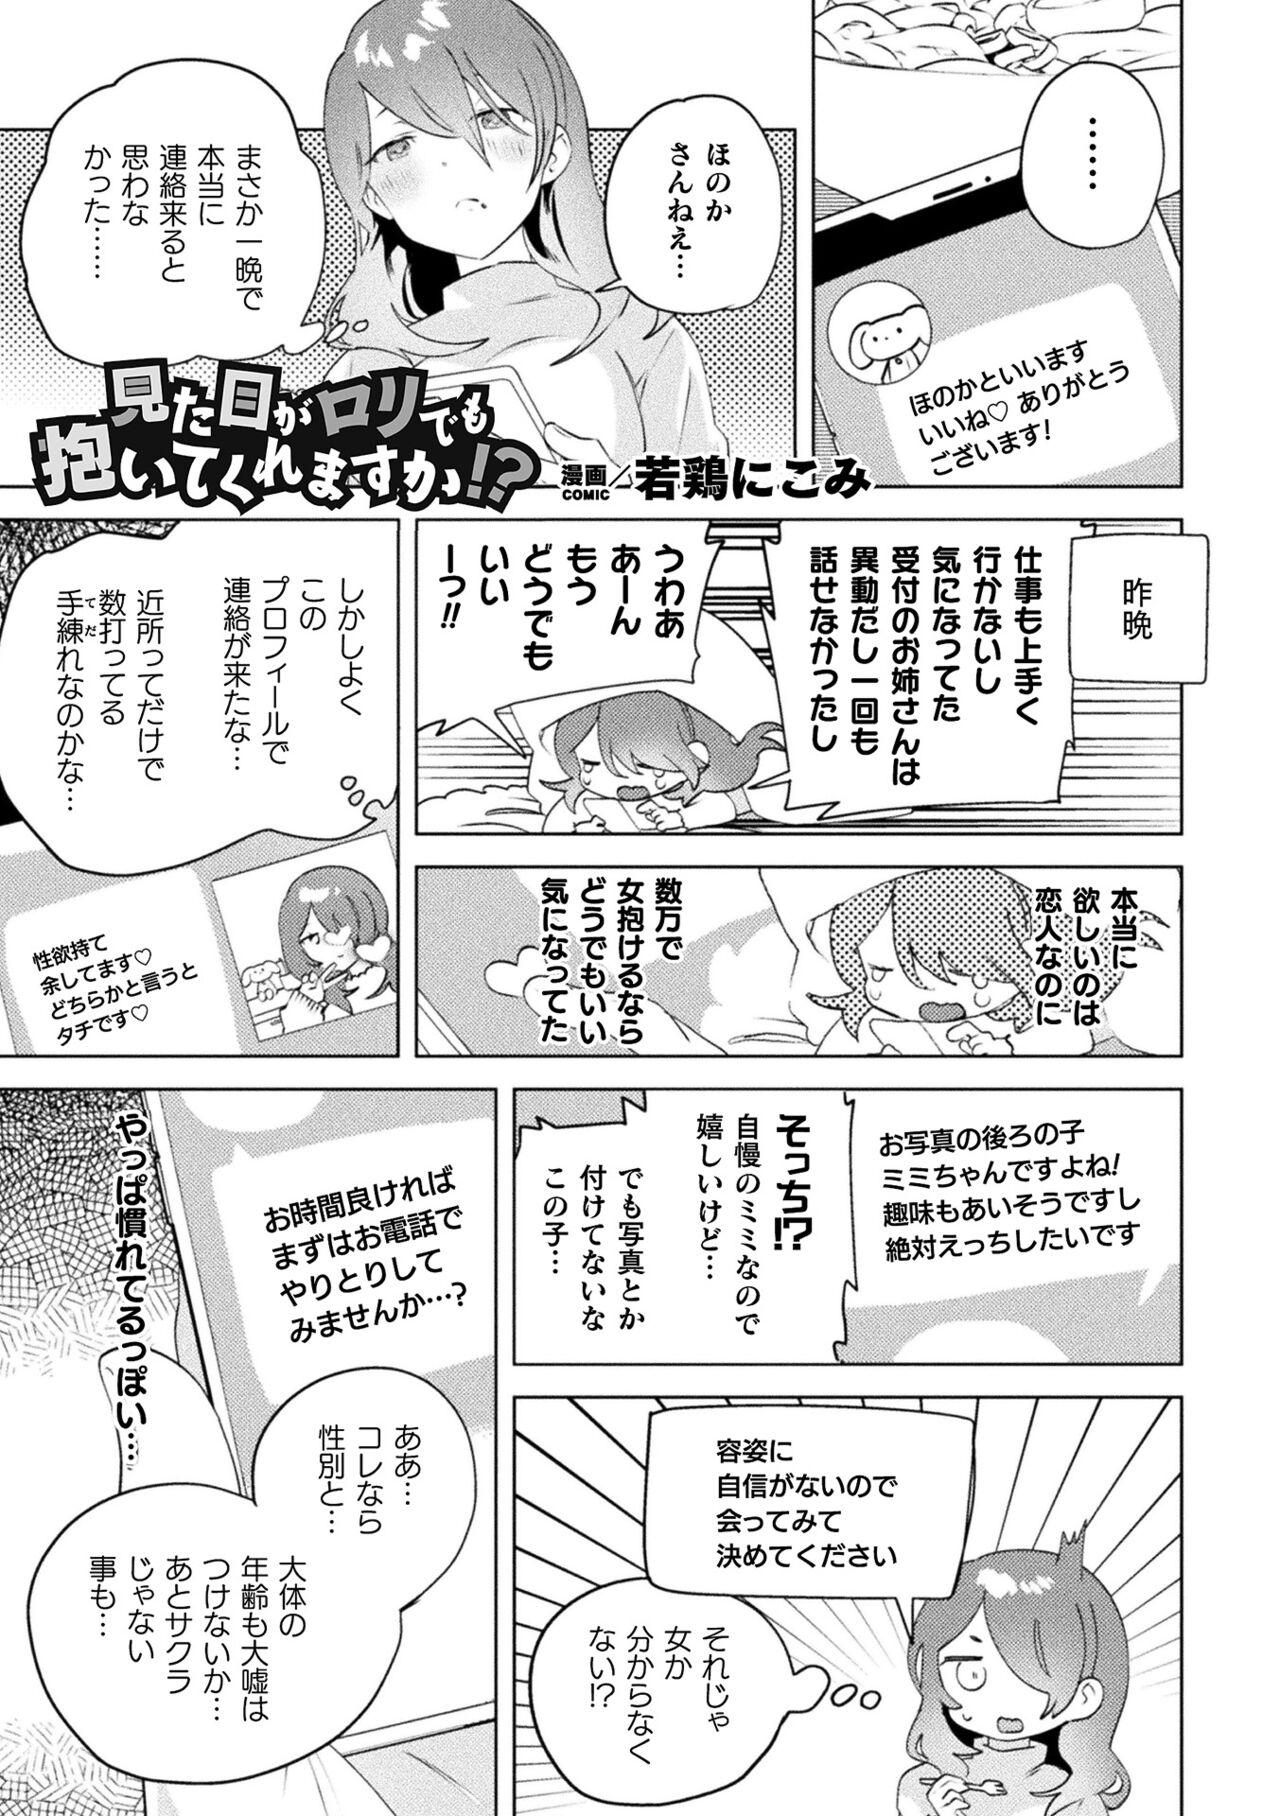 Babe 2D Comic Magazine Mamakatsu Yuri Ecchi Vol. 3 Couple - Page 3